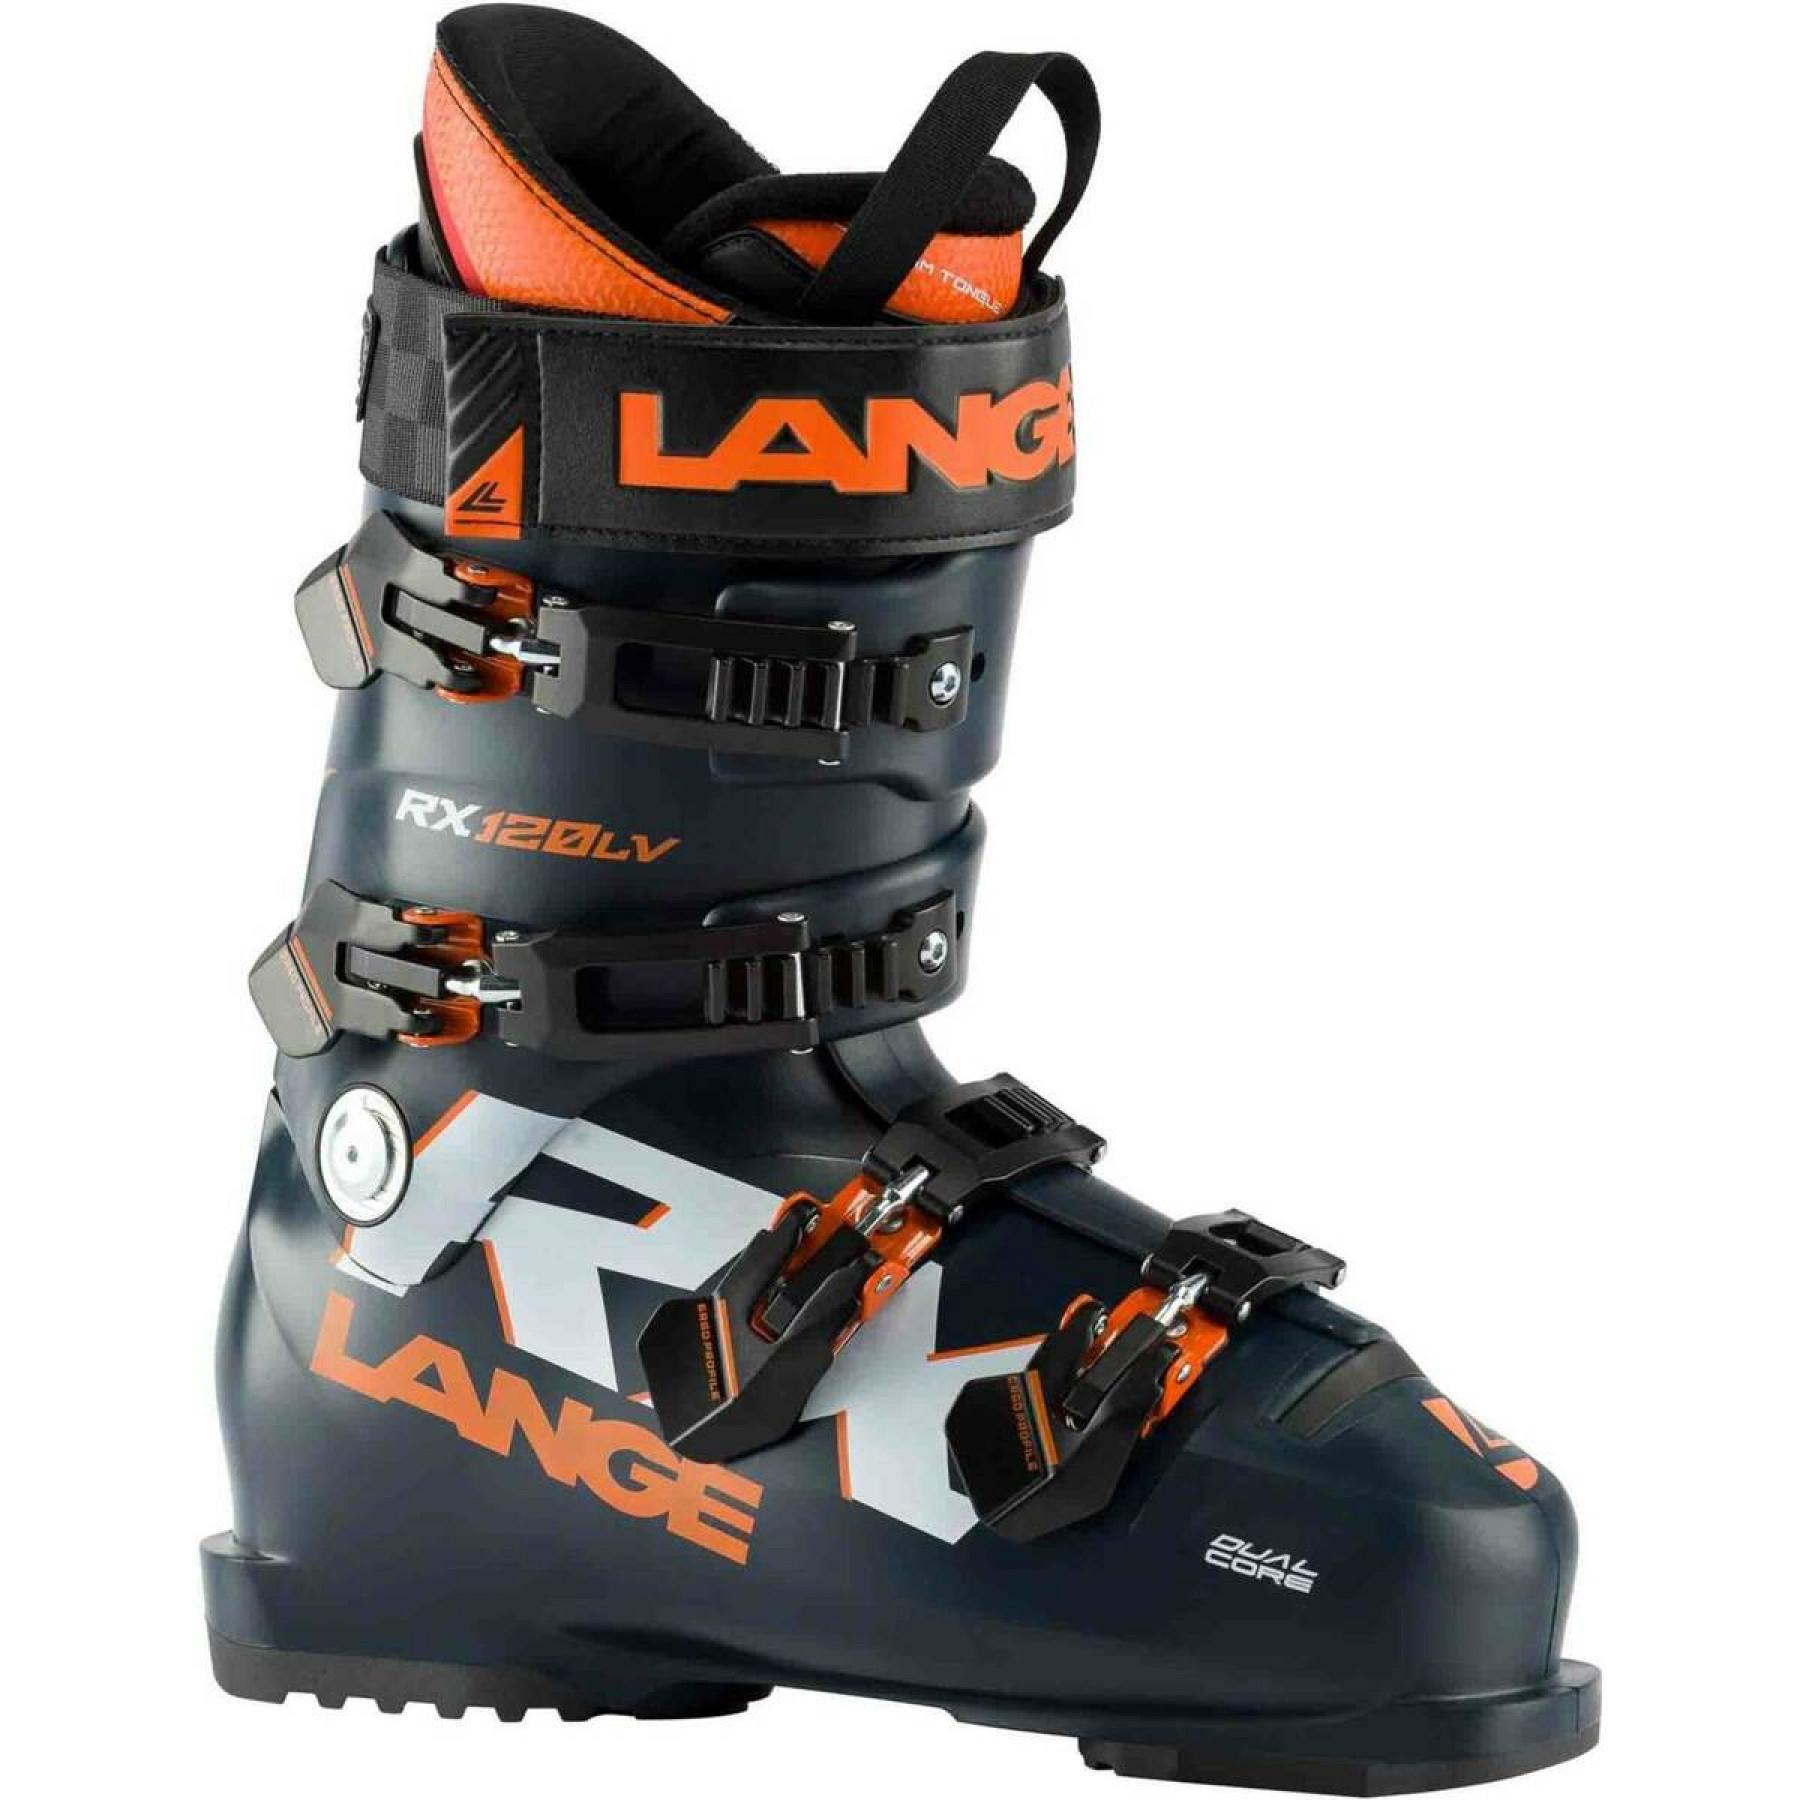 Buty narciarskie Lange rx 120 lv